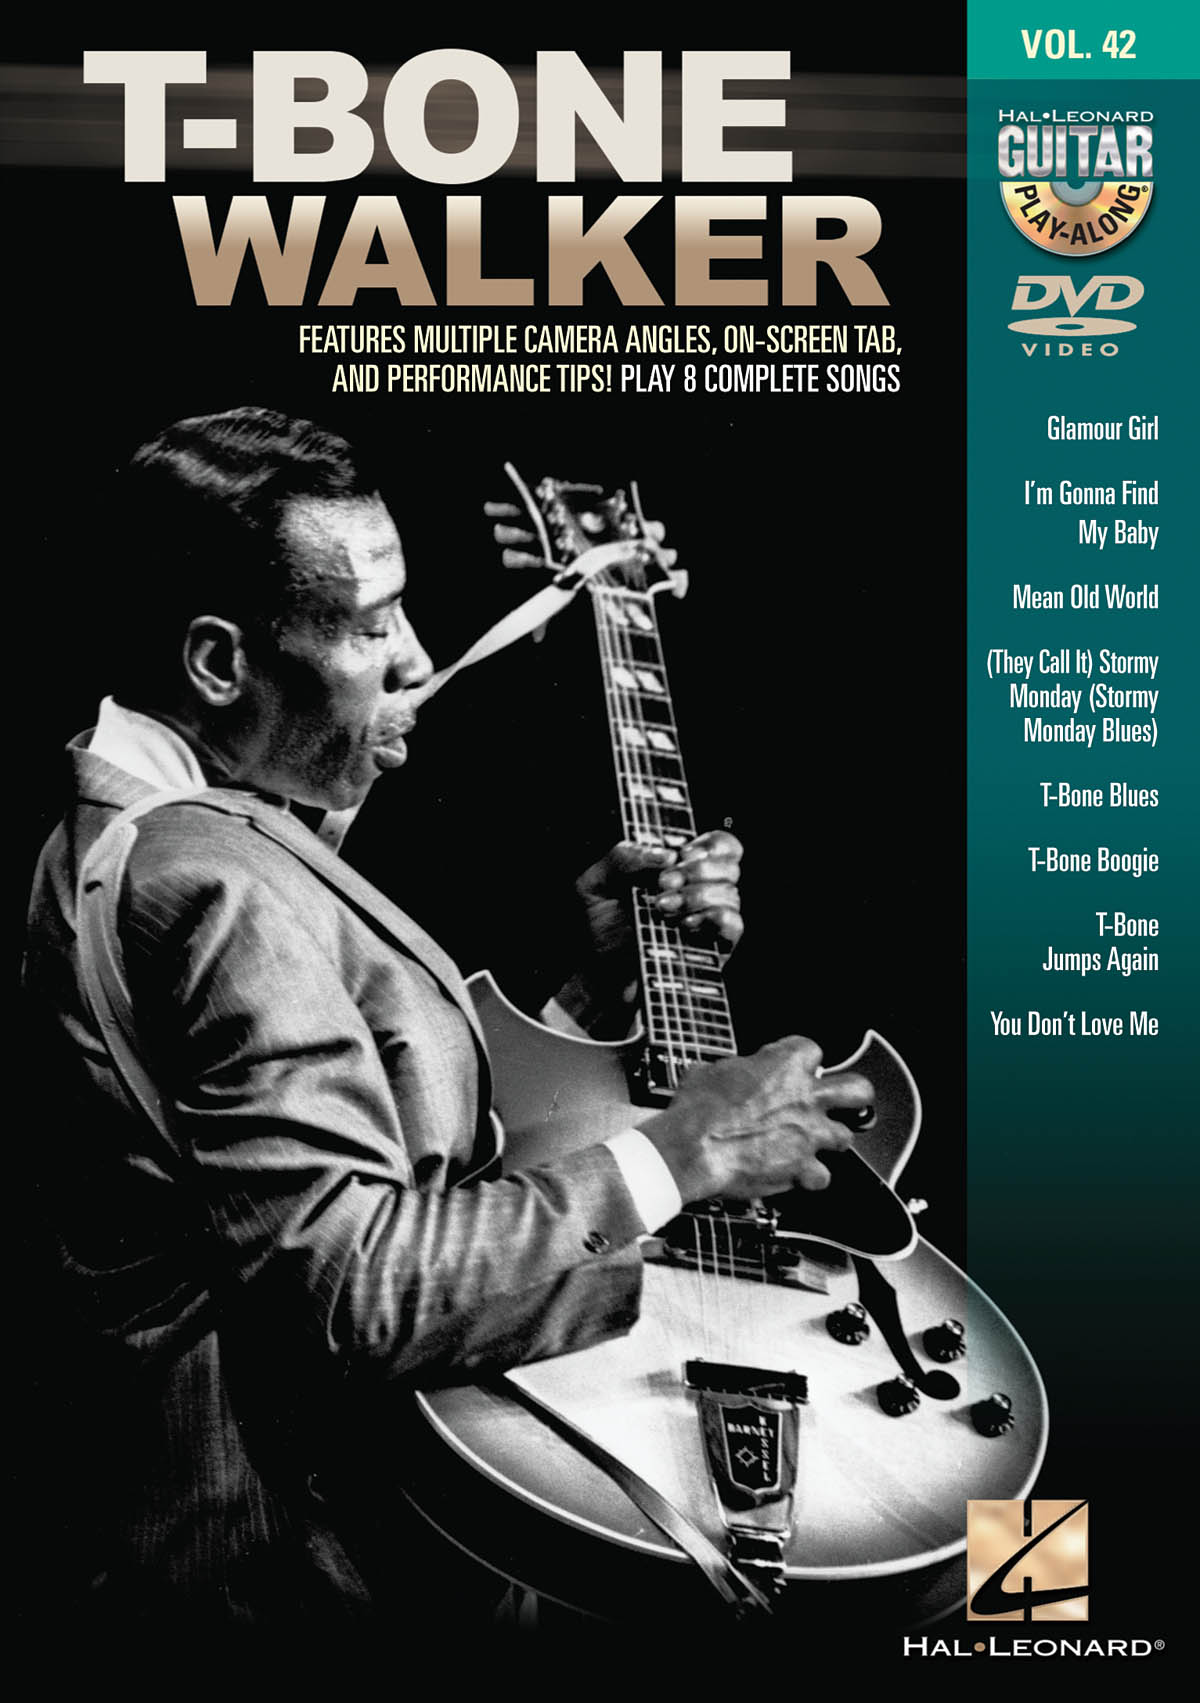 T-Bone Walker - Guitar Play-Along DVD Volume 42